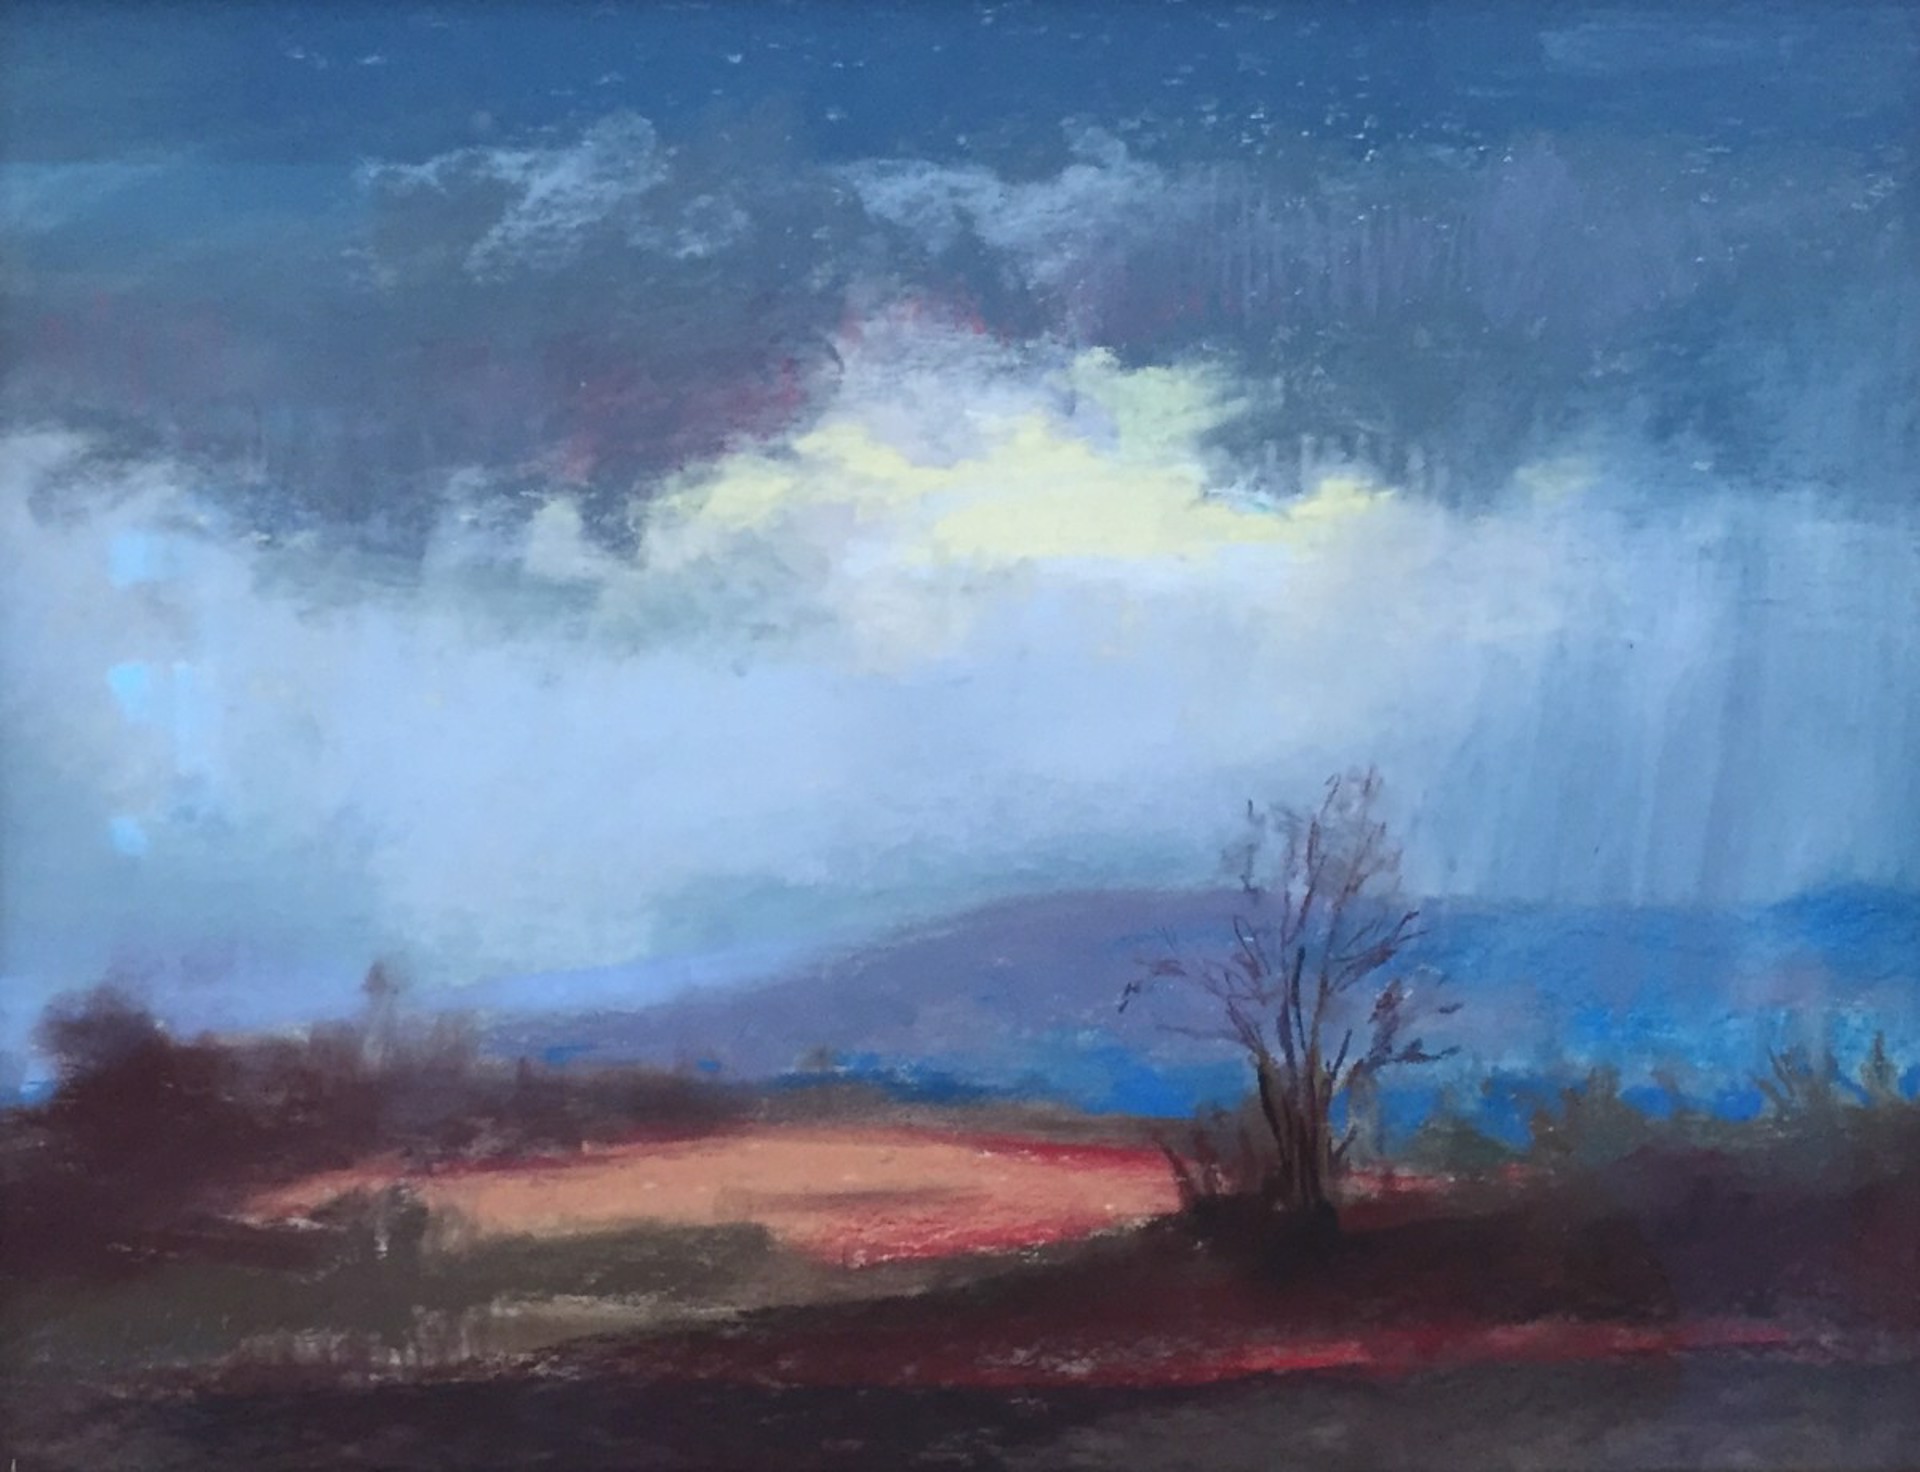 Storm Passing by Linda Richichi